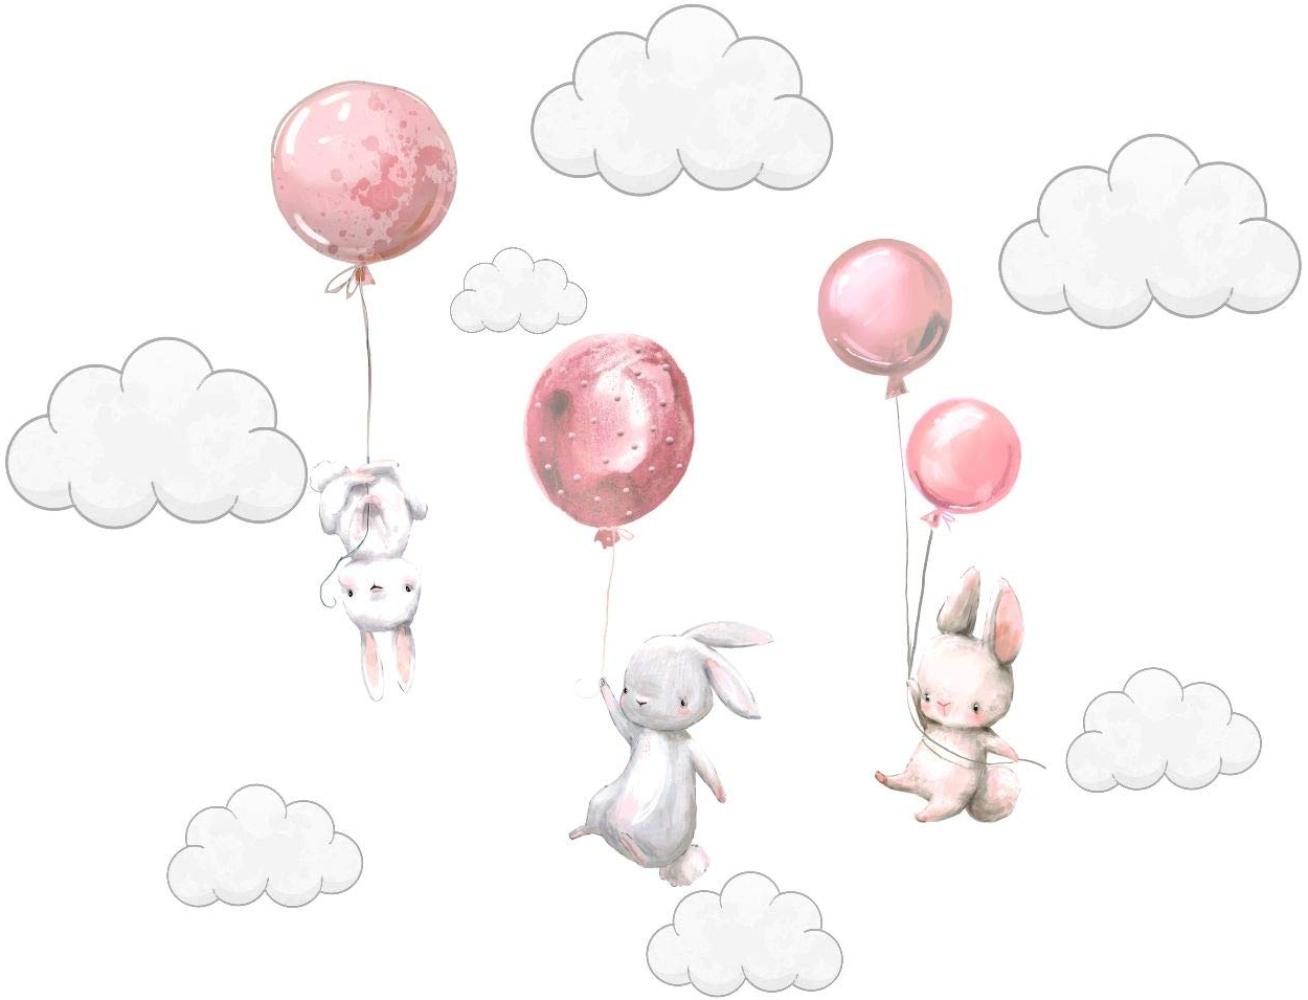 Szeridan Kaninchen Hase Ballons Wolken Wandtattoo Babyzimmer Wandsticker Wandaufkleber Aufkleber Deko für Kinderzimmer Baby Kinder Kinderzimmer Mädchen Junge Dekoration 135 x 160 cm (XXL, Rosa) Bild 1